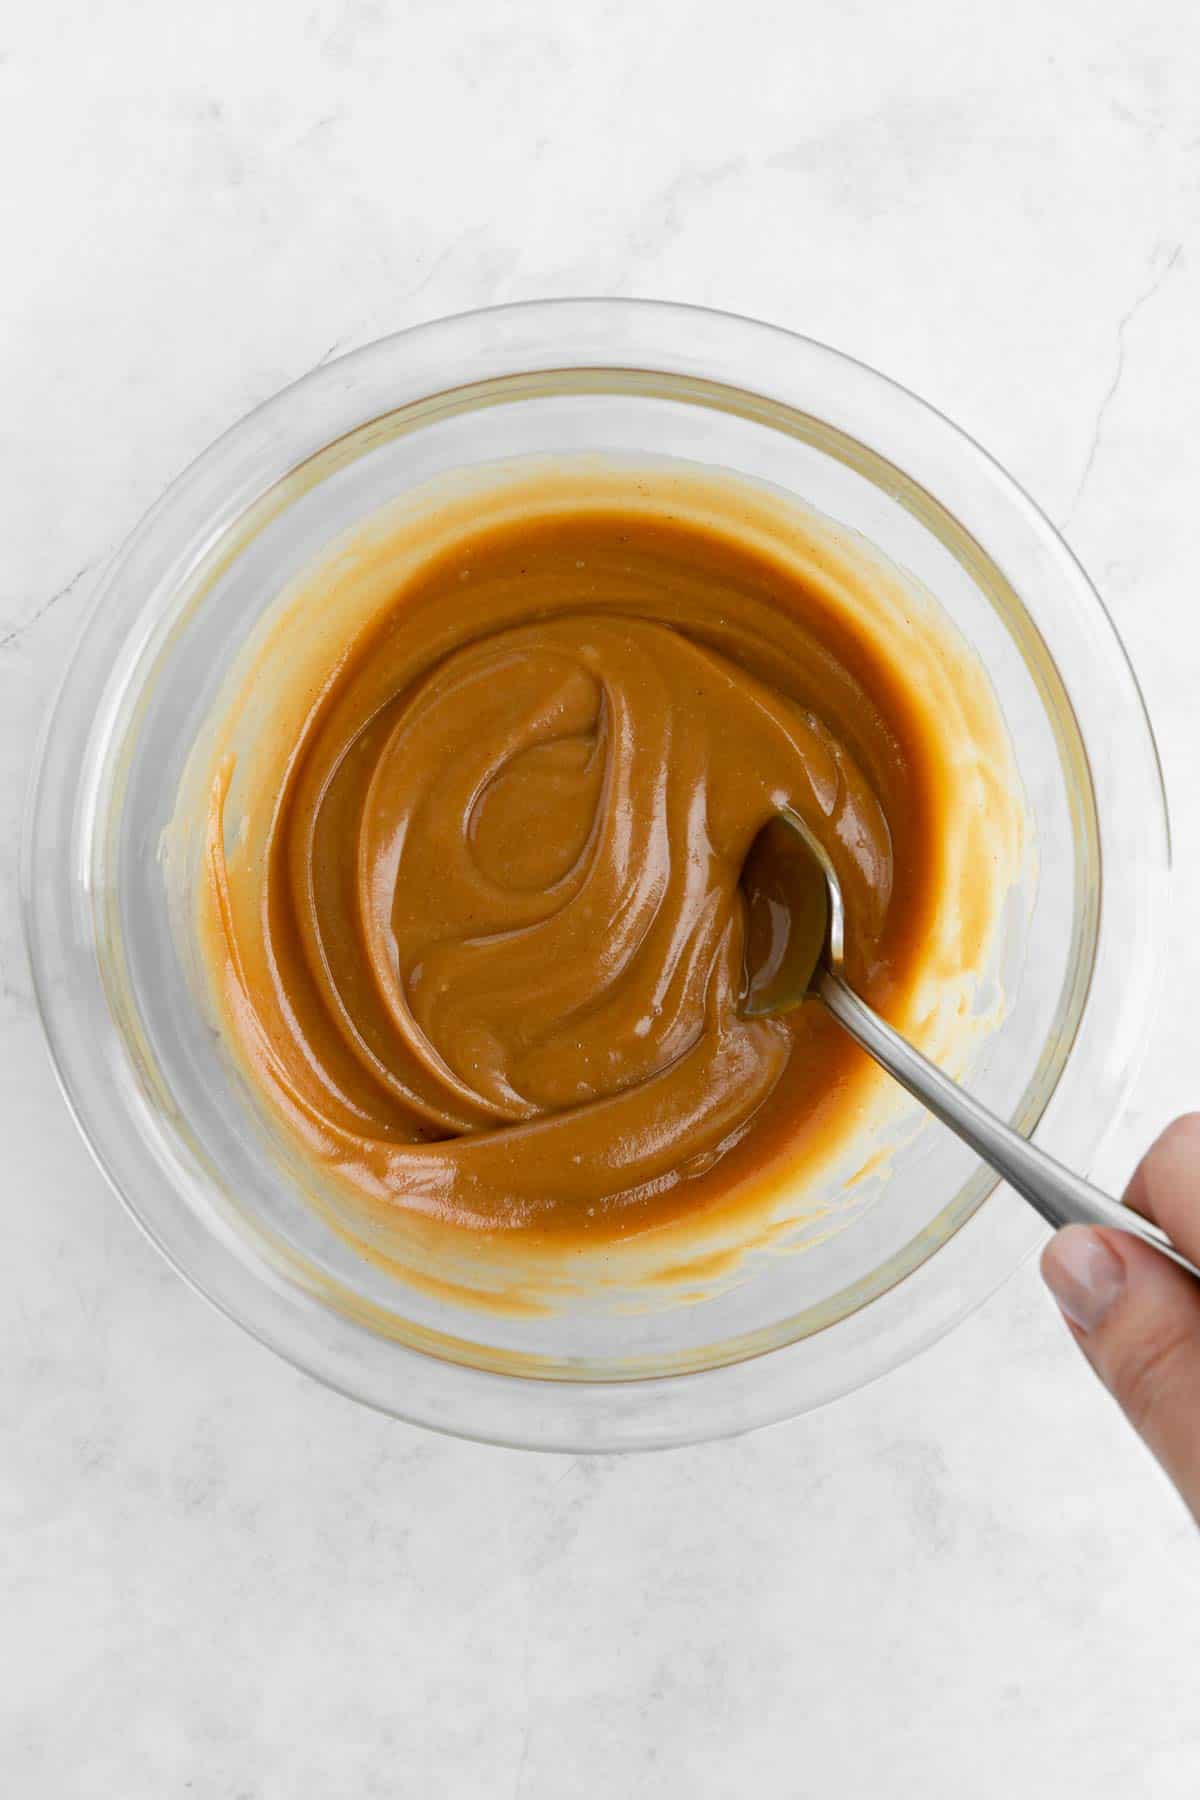 a spoon mixing vegan caramel in a glass bowl